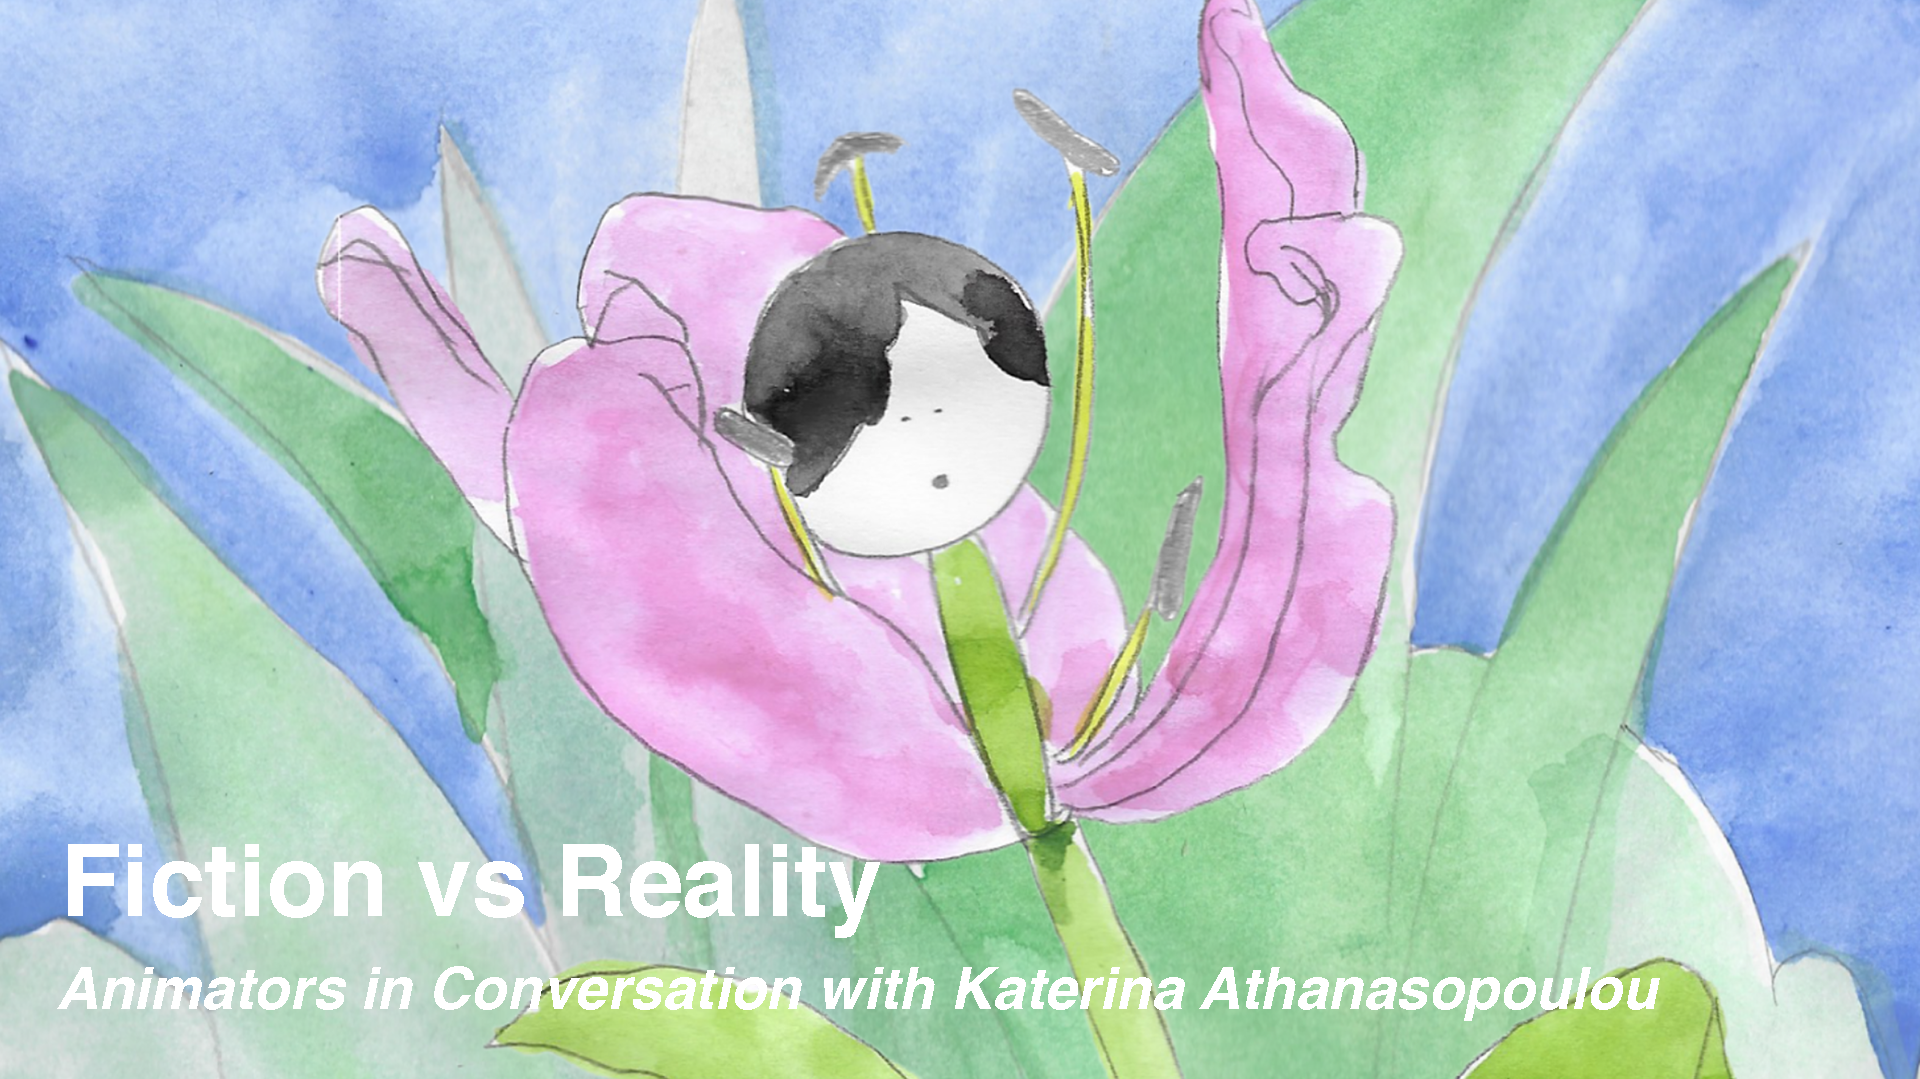 Animators in Conversation: Fiction vs Reality